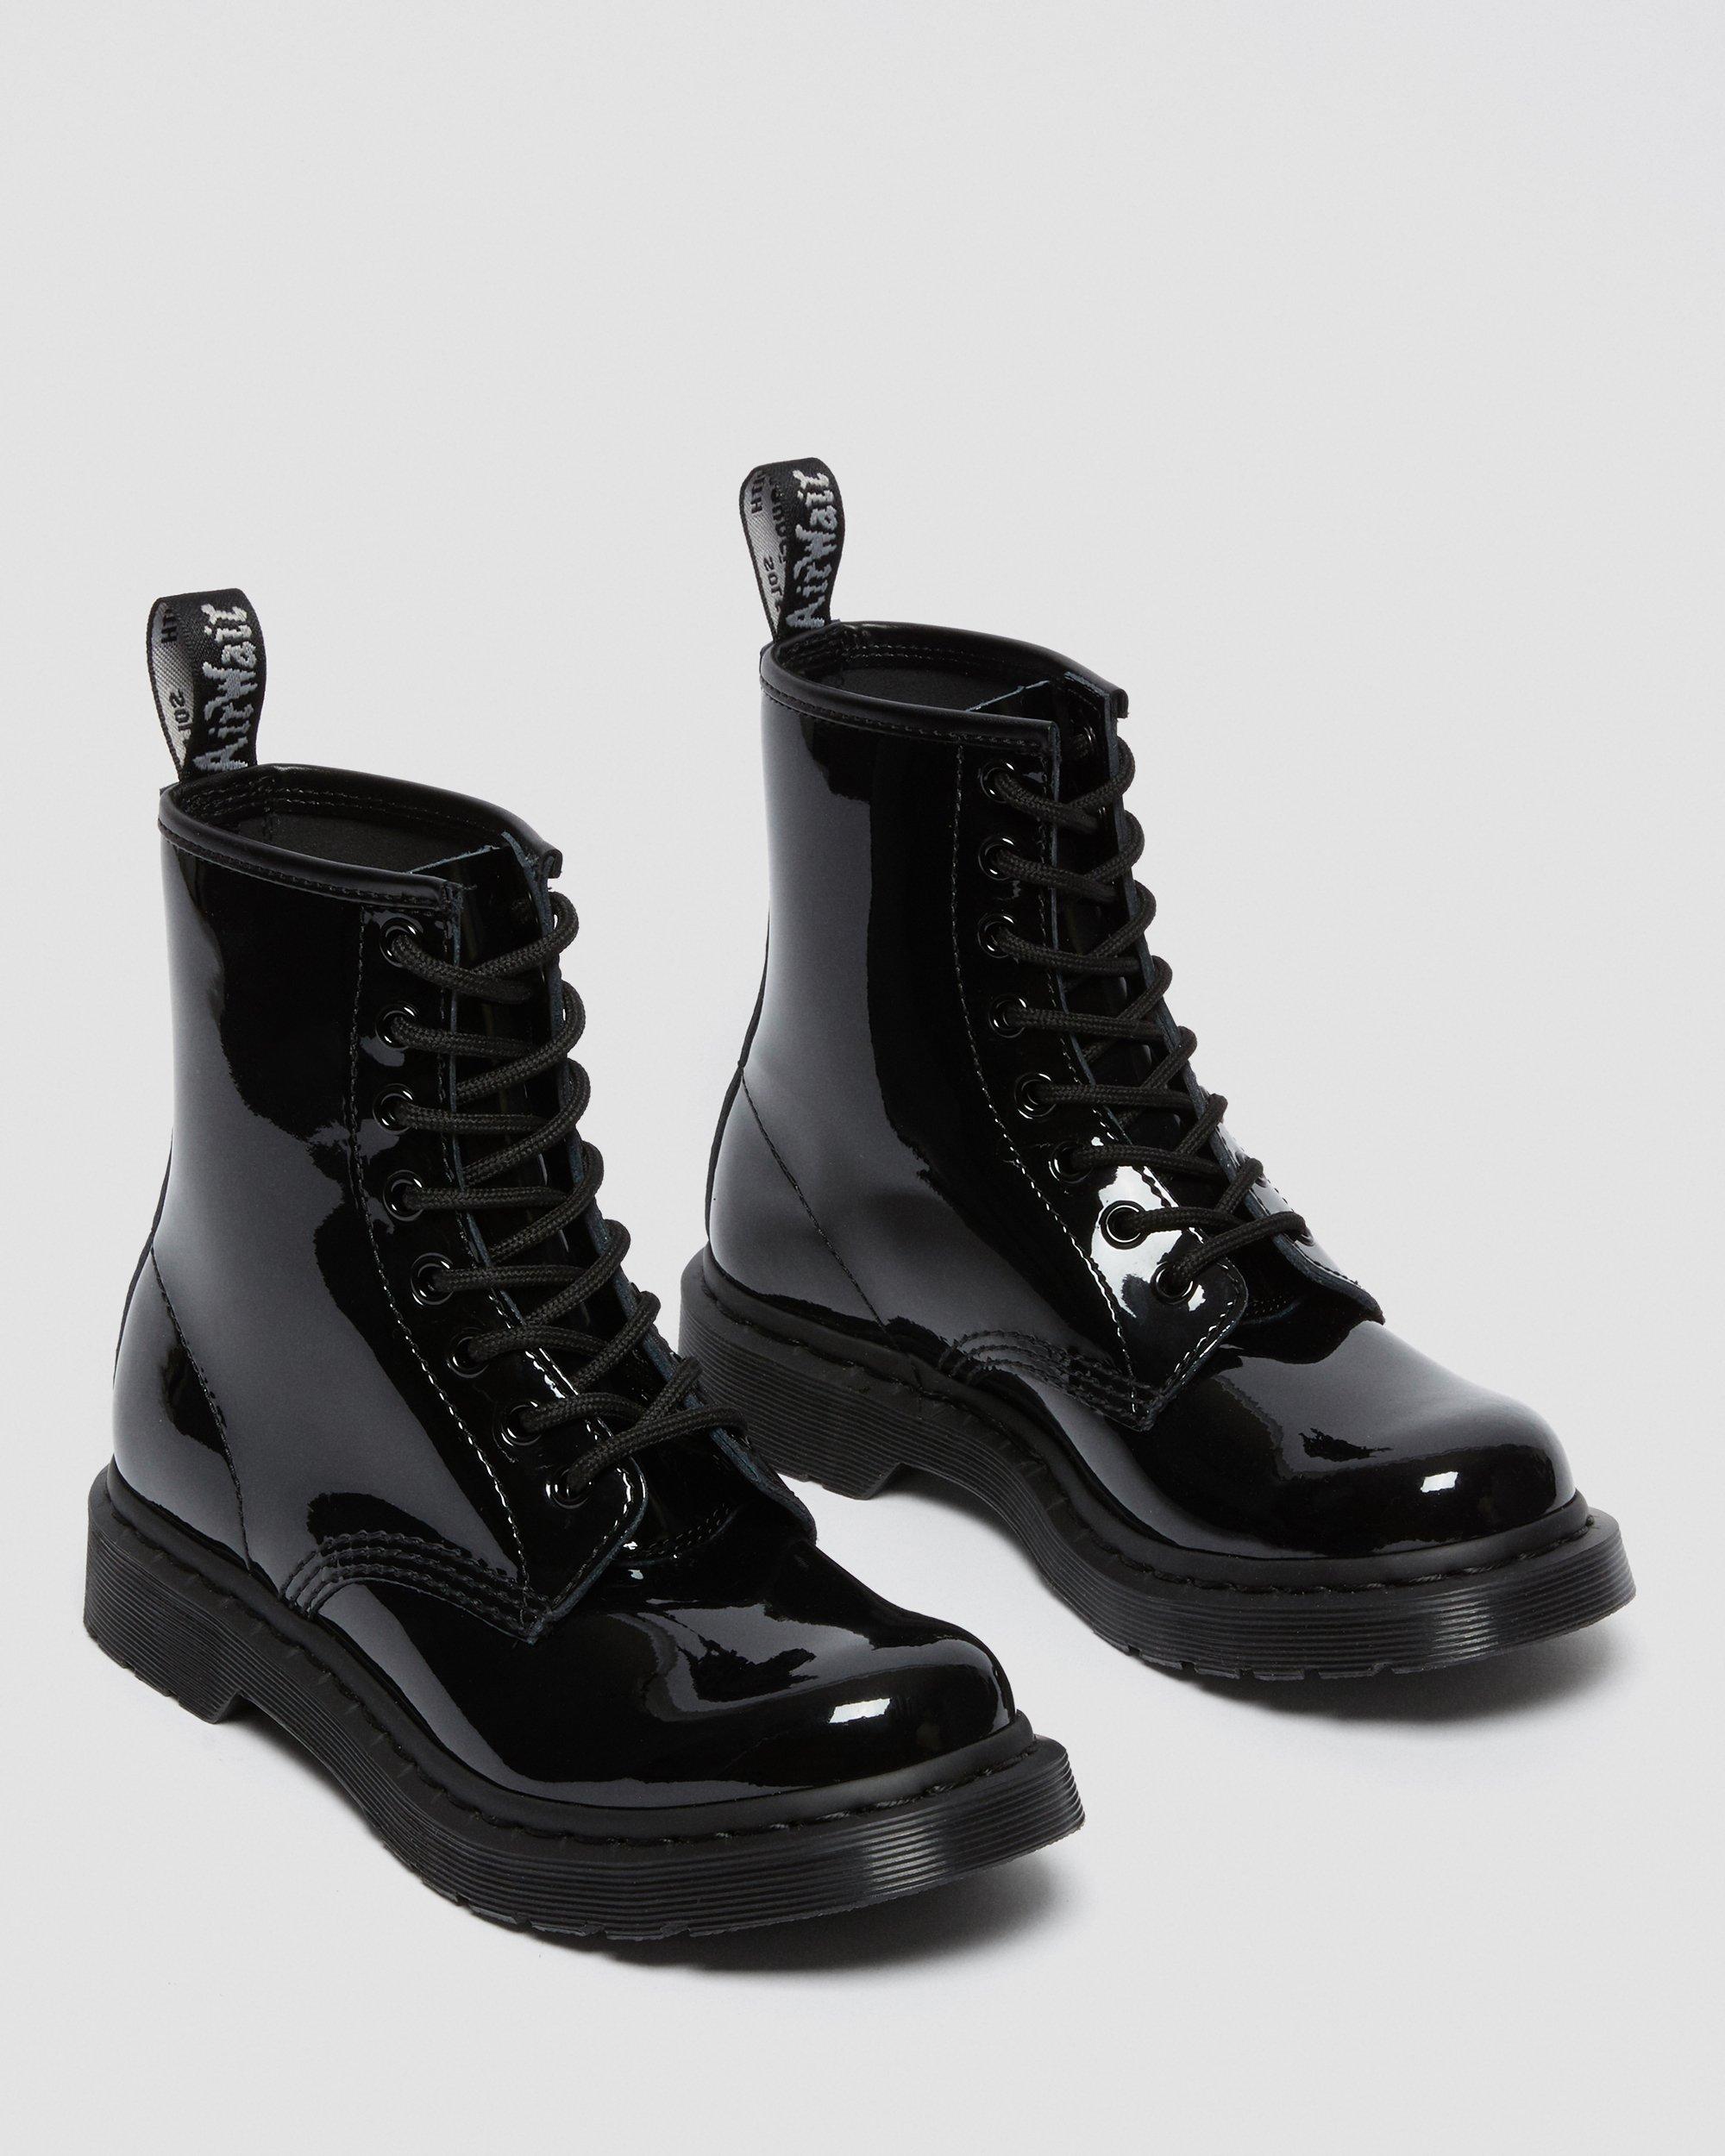 PIECOLOUR 1460 8-Eye Black Patent Leather Boots Black Patent Lamper